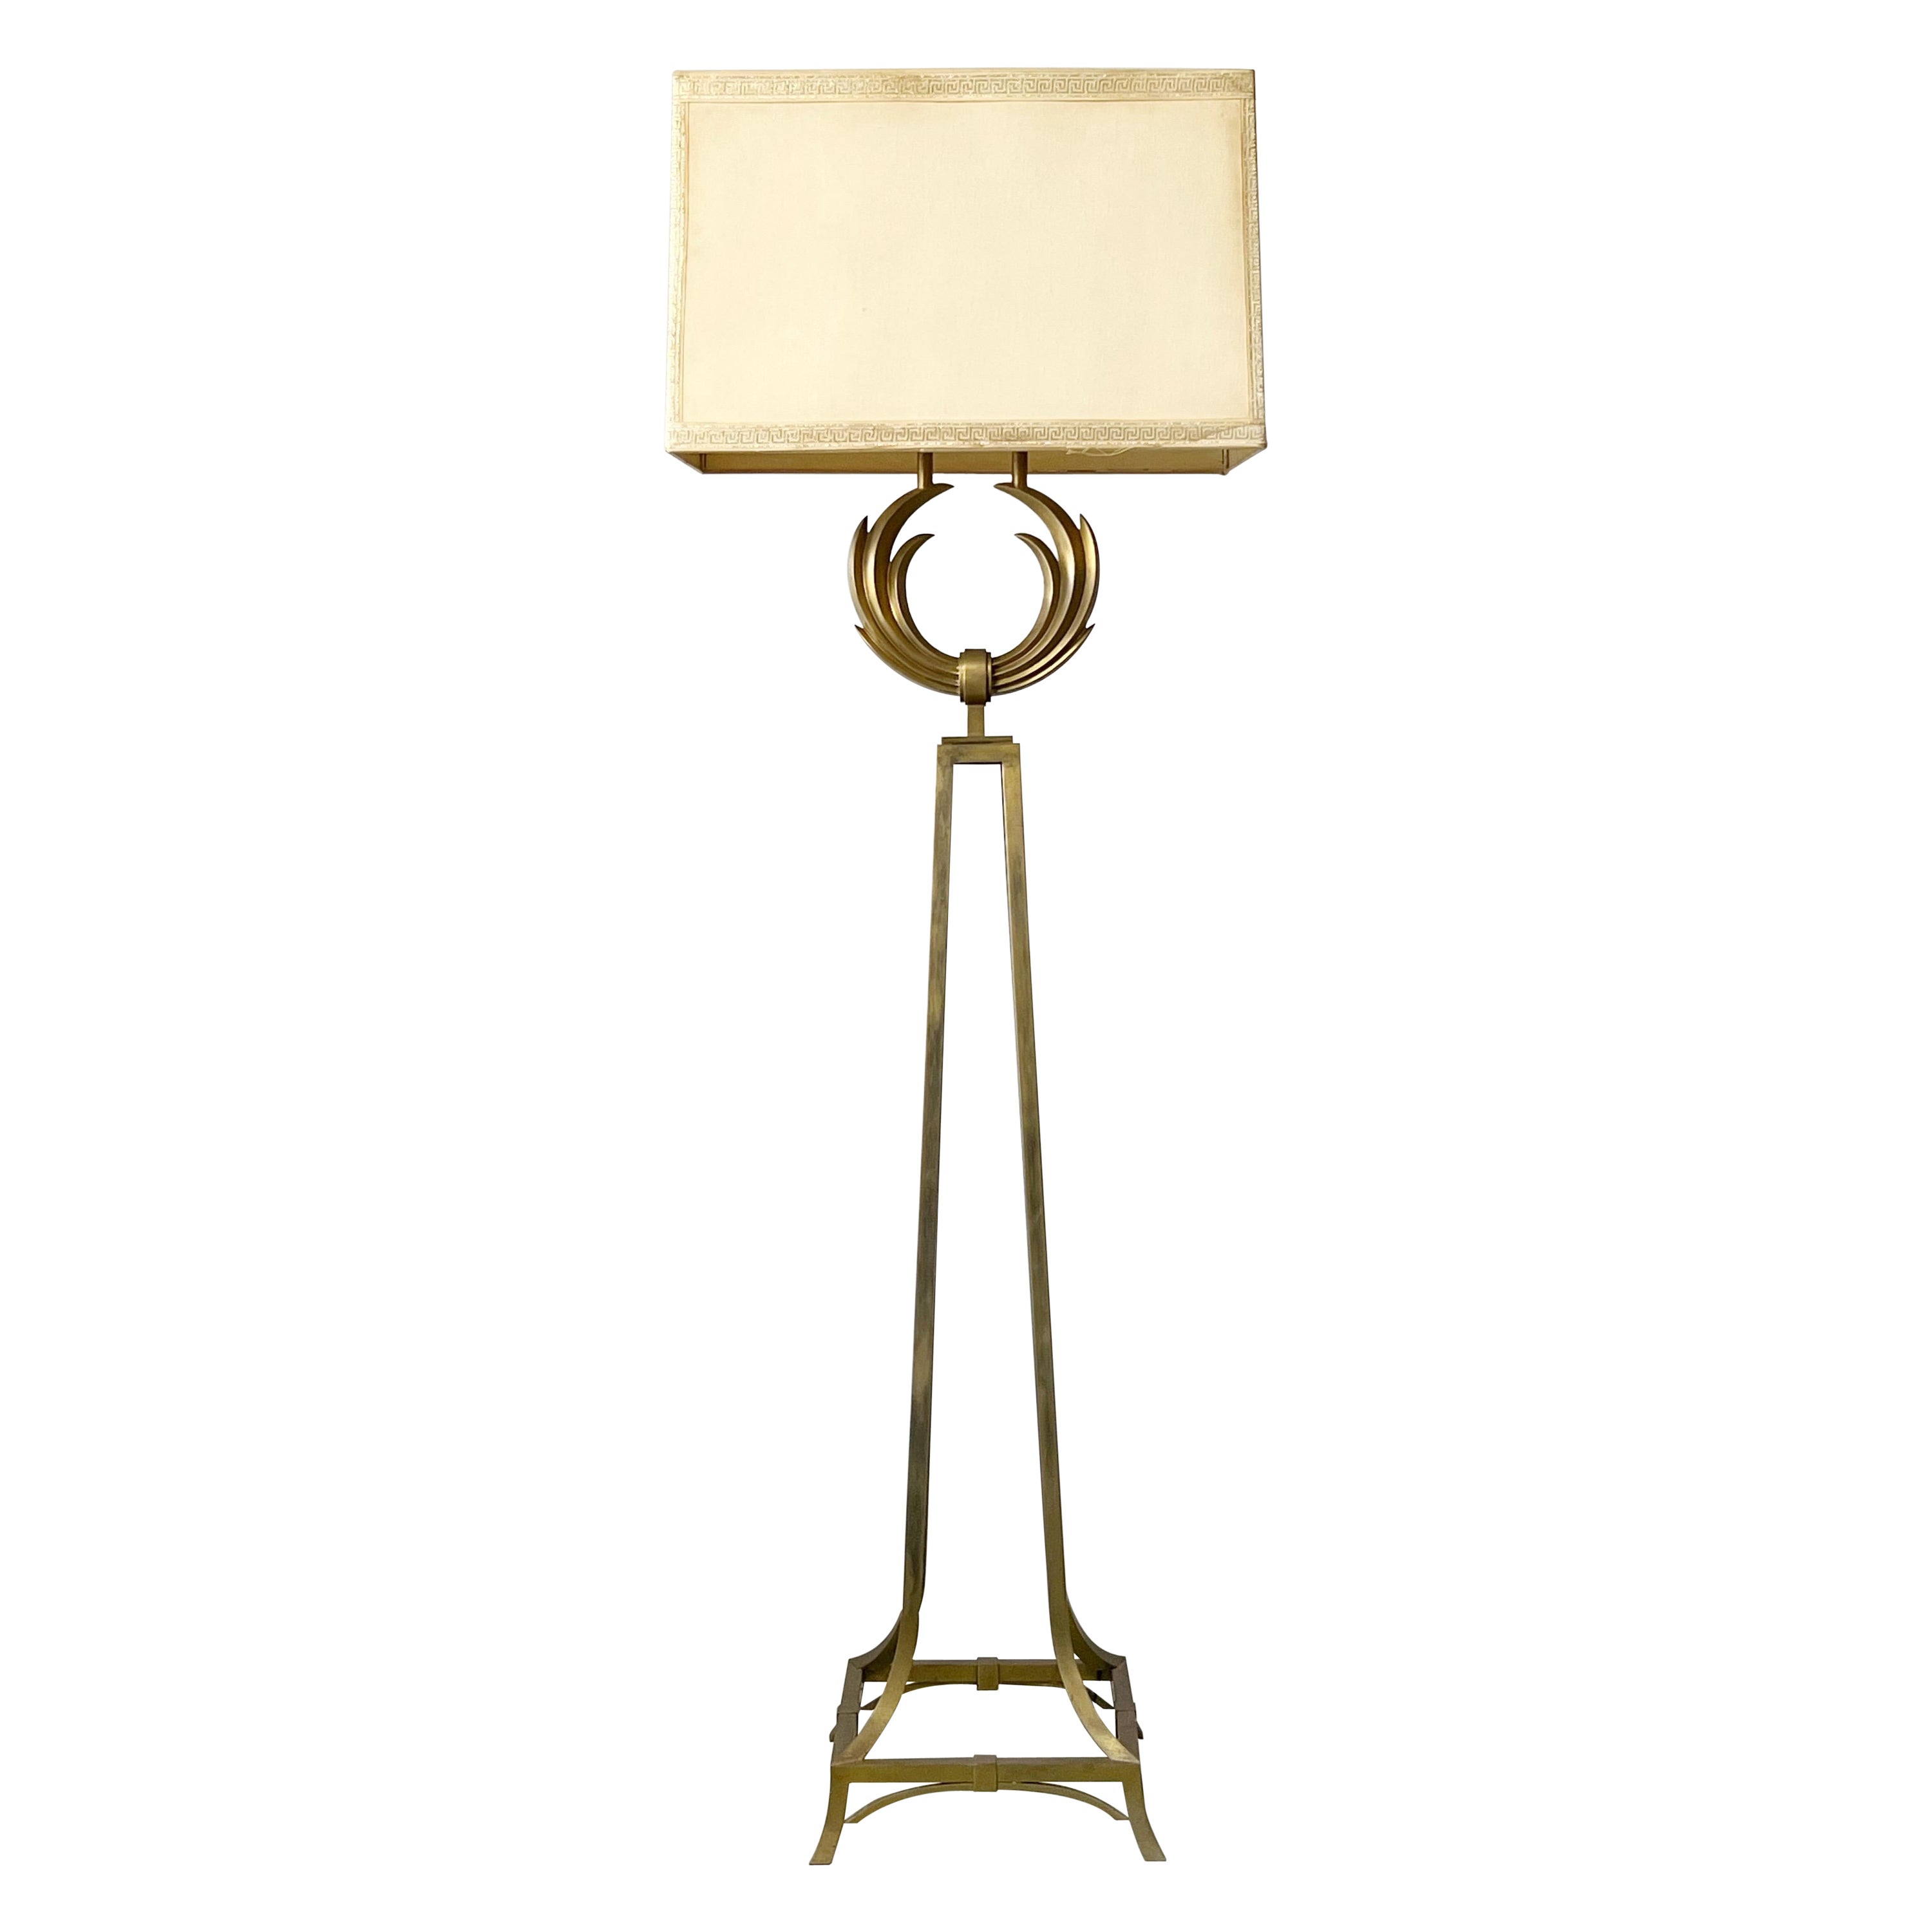 Neoclassic Brass Floor Lamp with Greek Key Shade